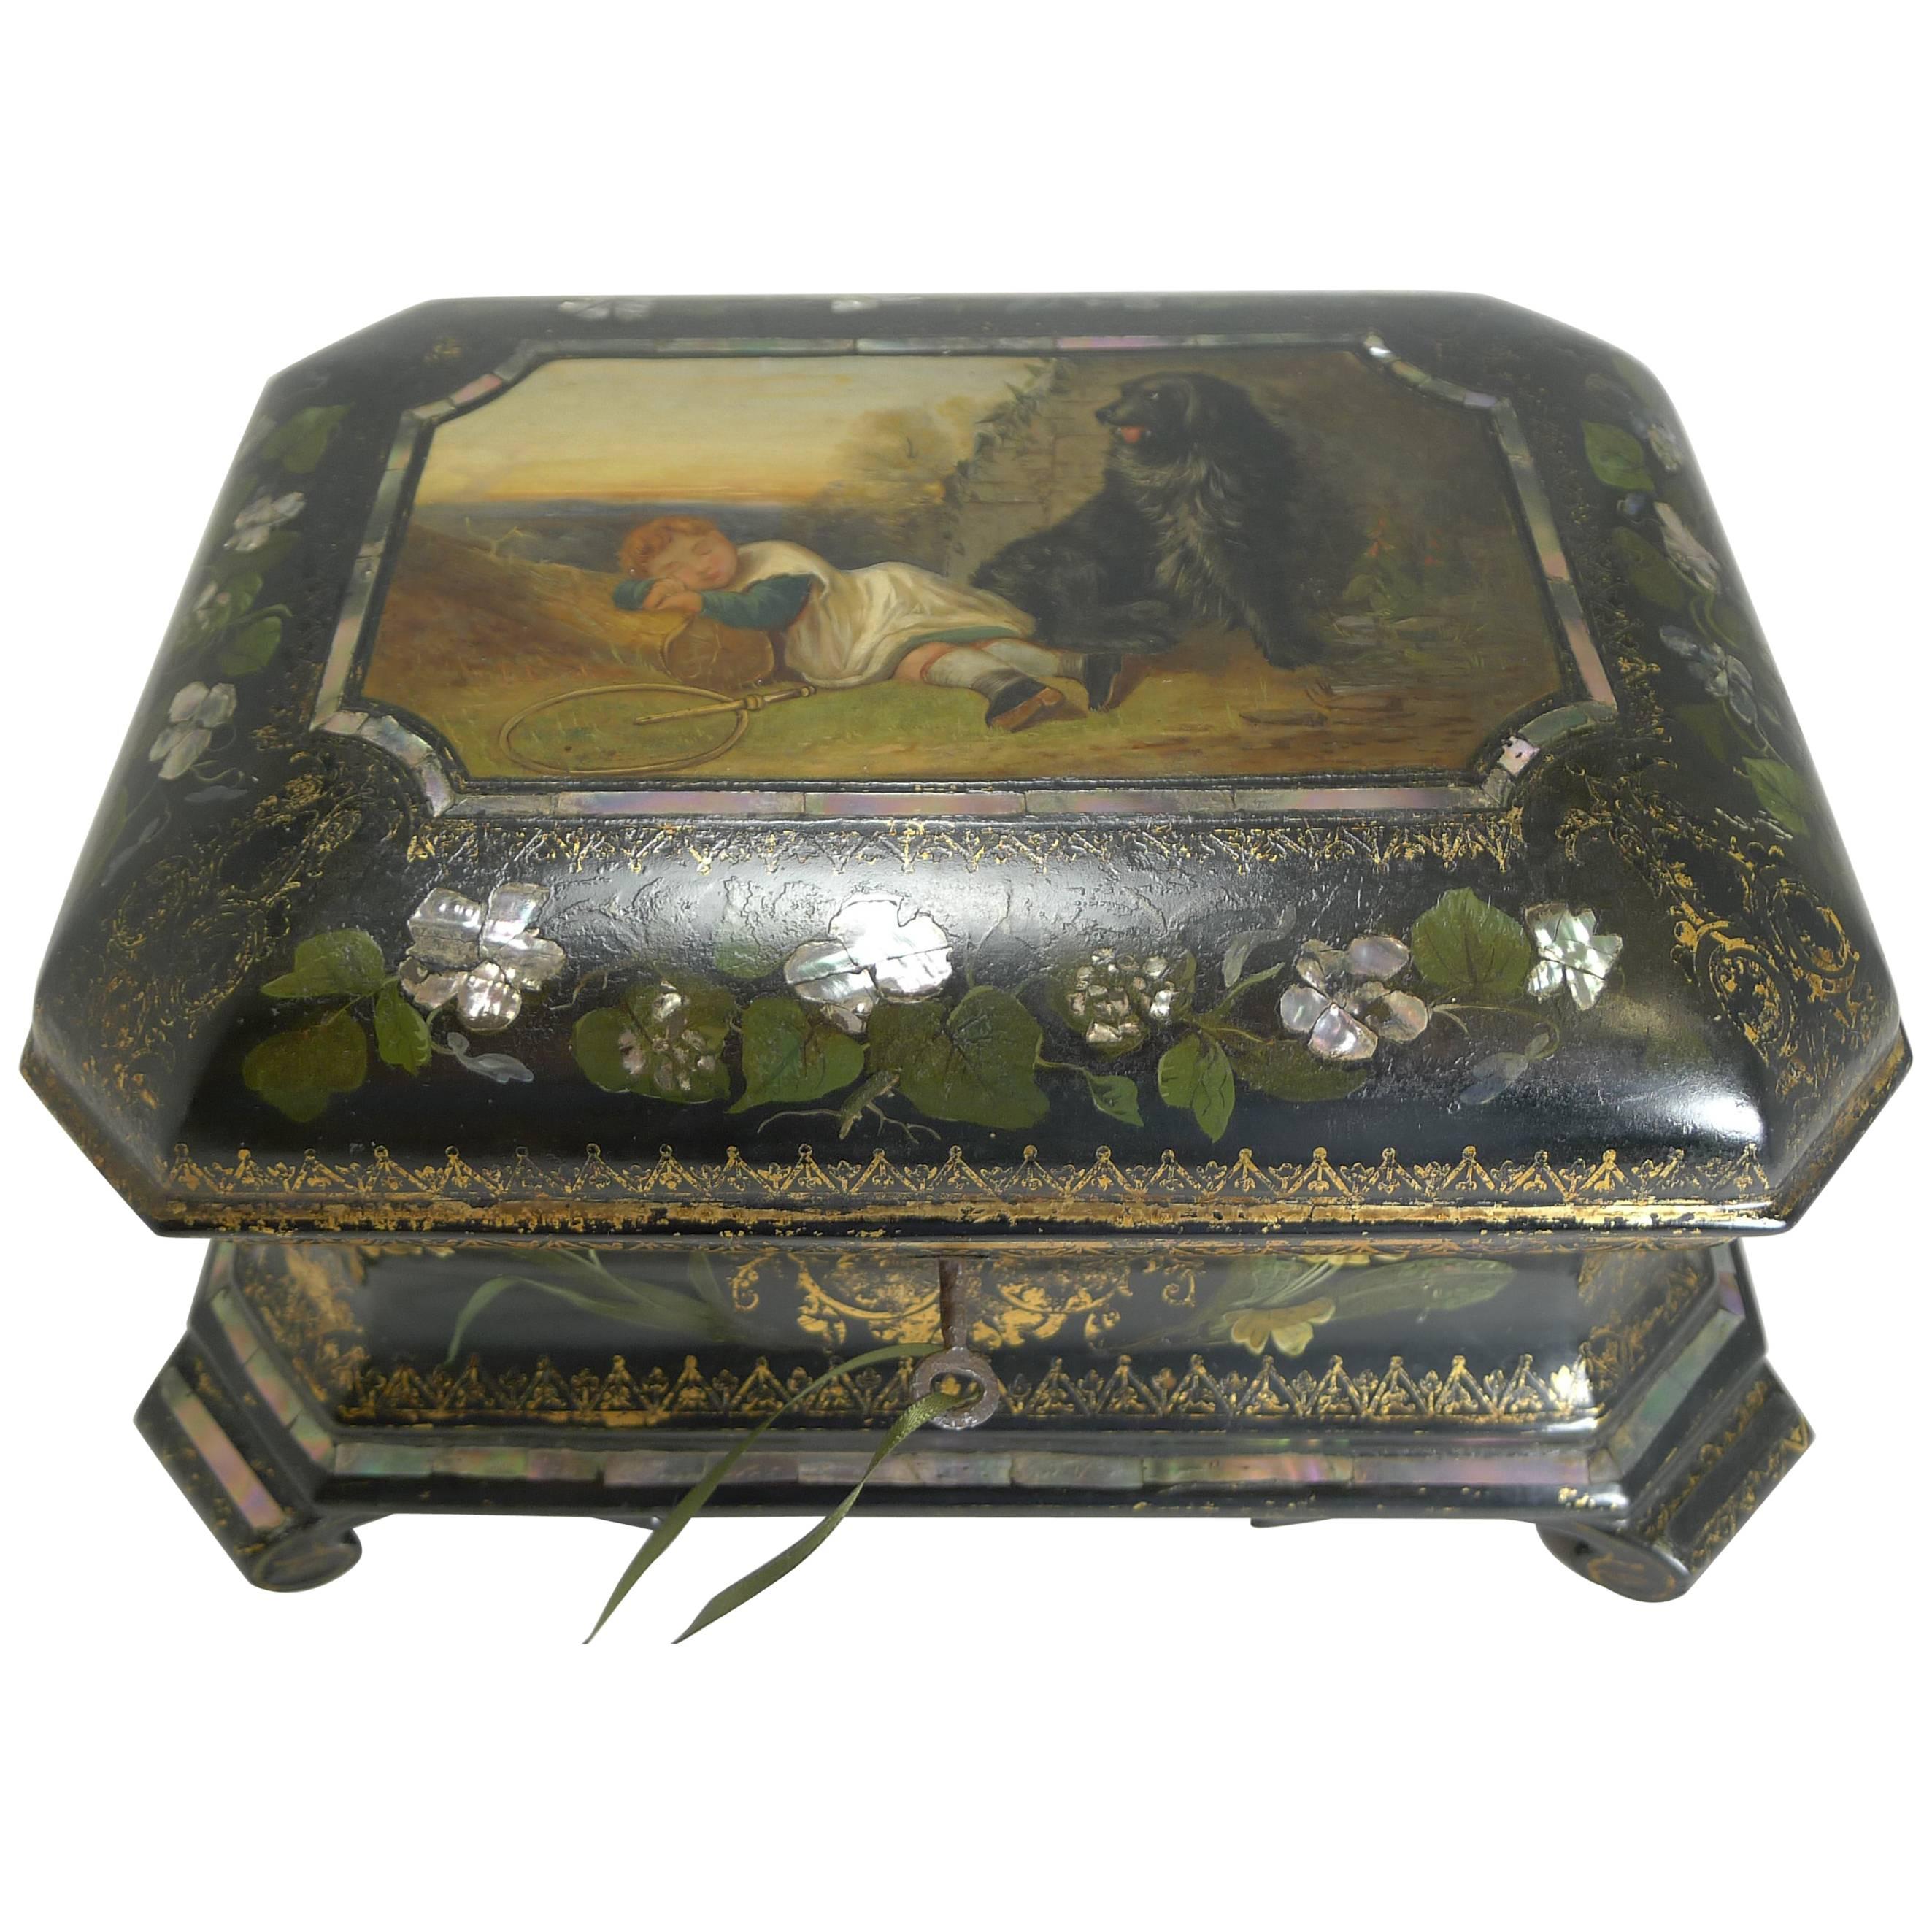 Exquisite Jennens & Bettridge Jewelry Box circa 1850, Girl and Dog Painting